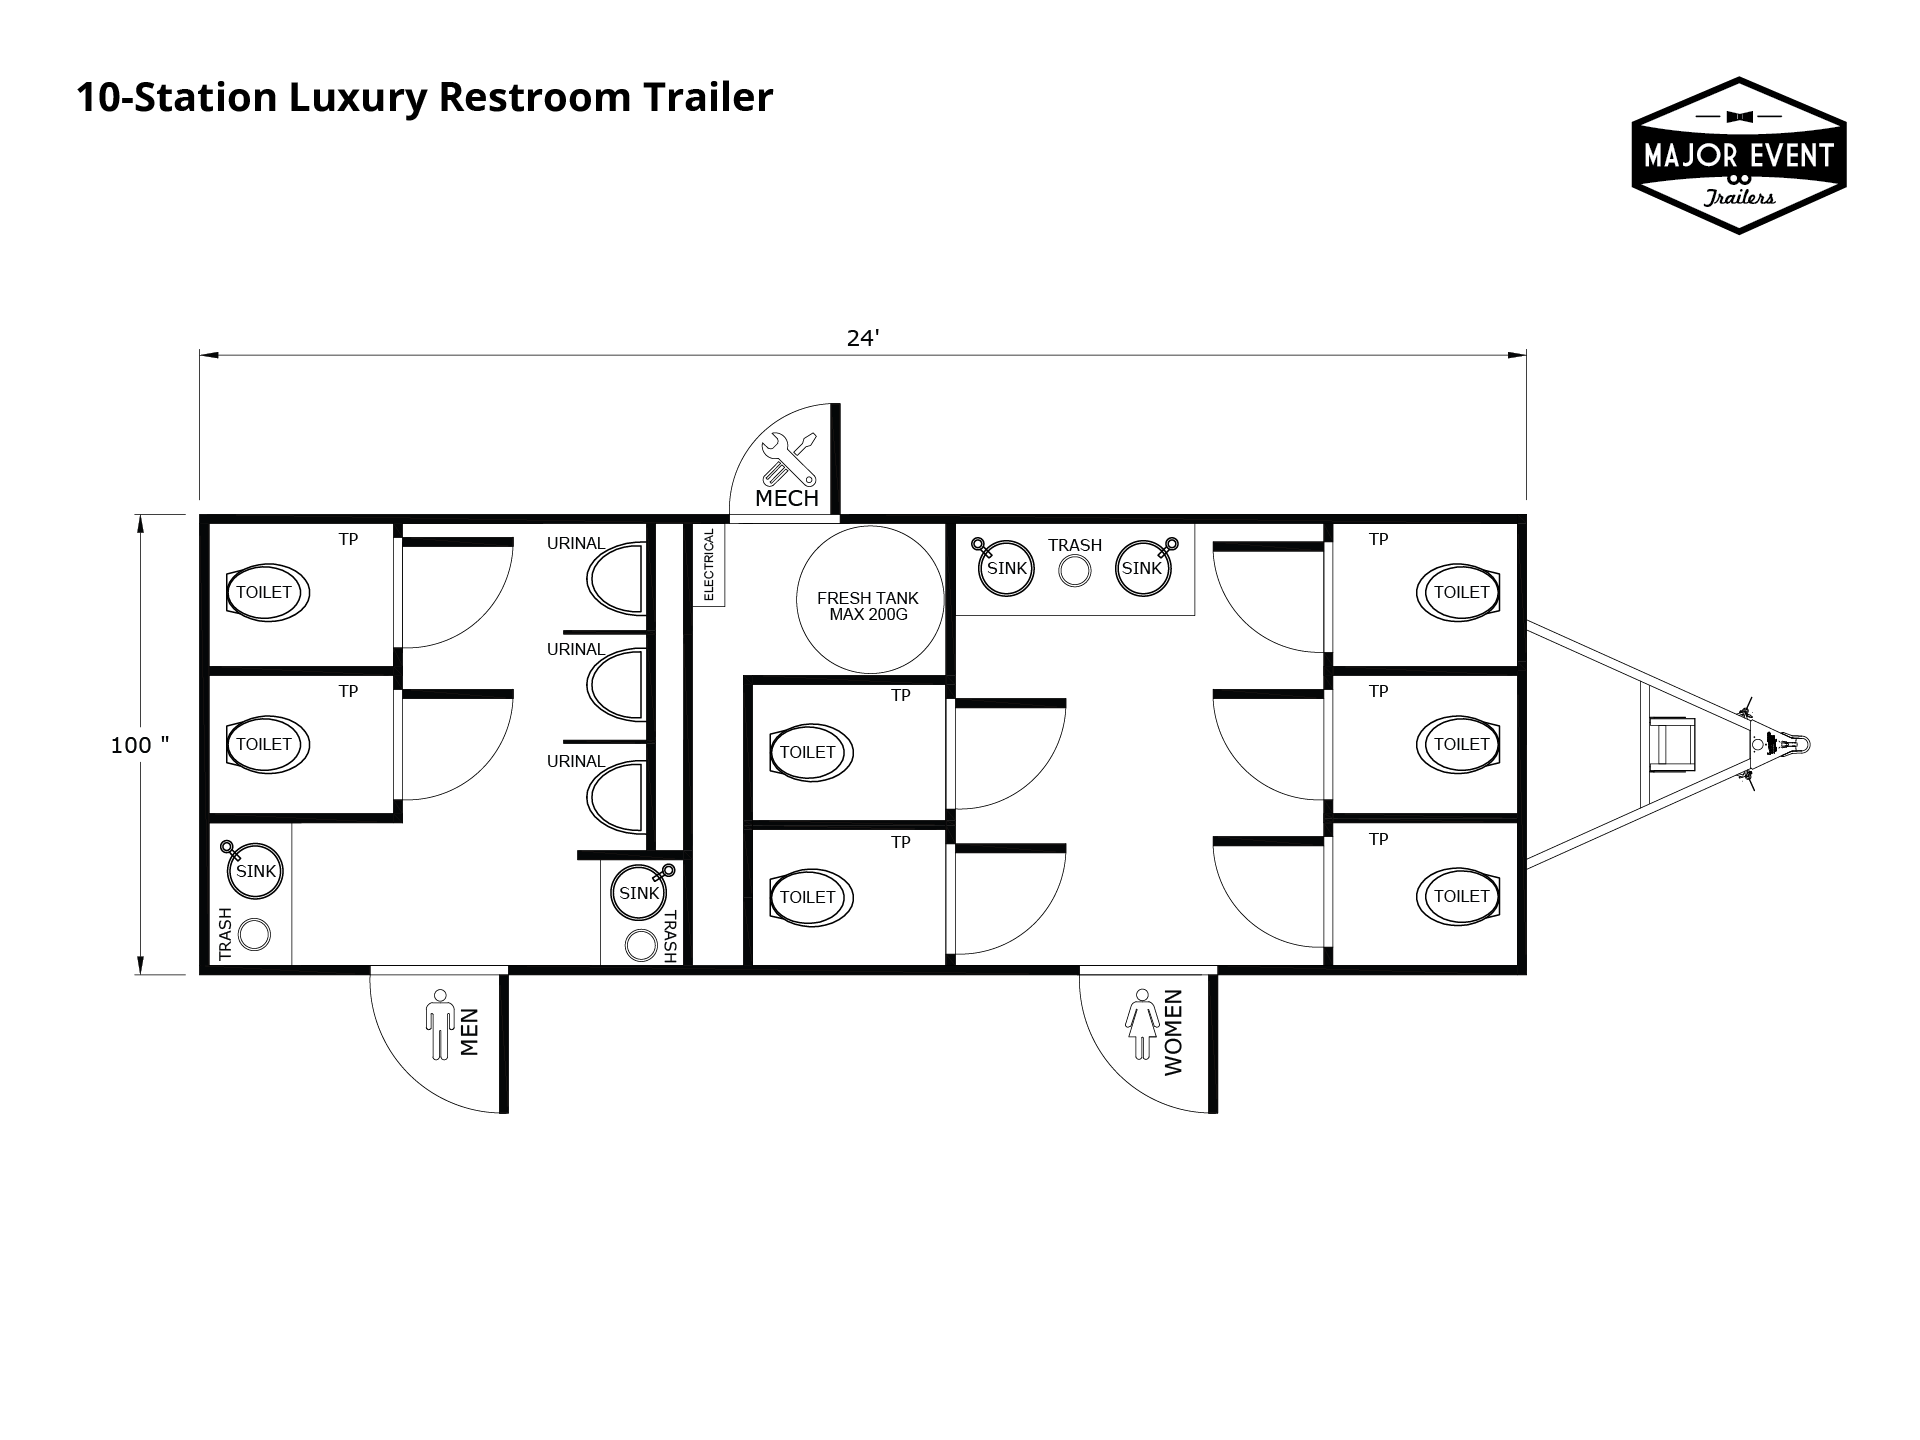 10-Station Luxury Restroom Trailer – Trailer Diagram View